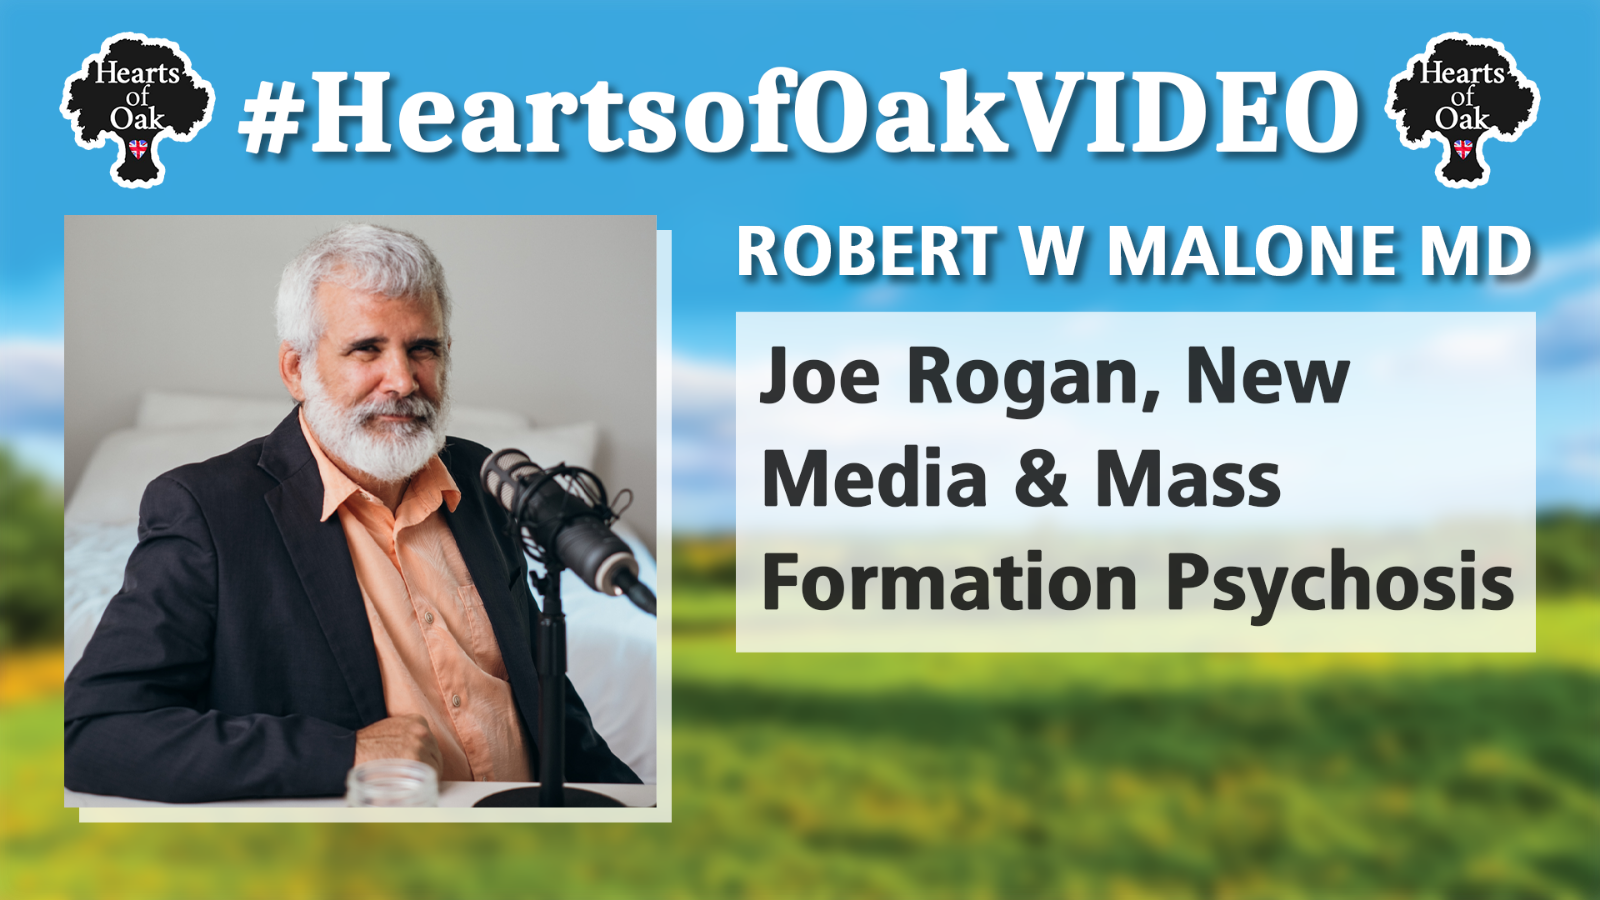 Robert W Malone MD - Joe Rogan, New Media & Mass Formation Psychosis